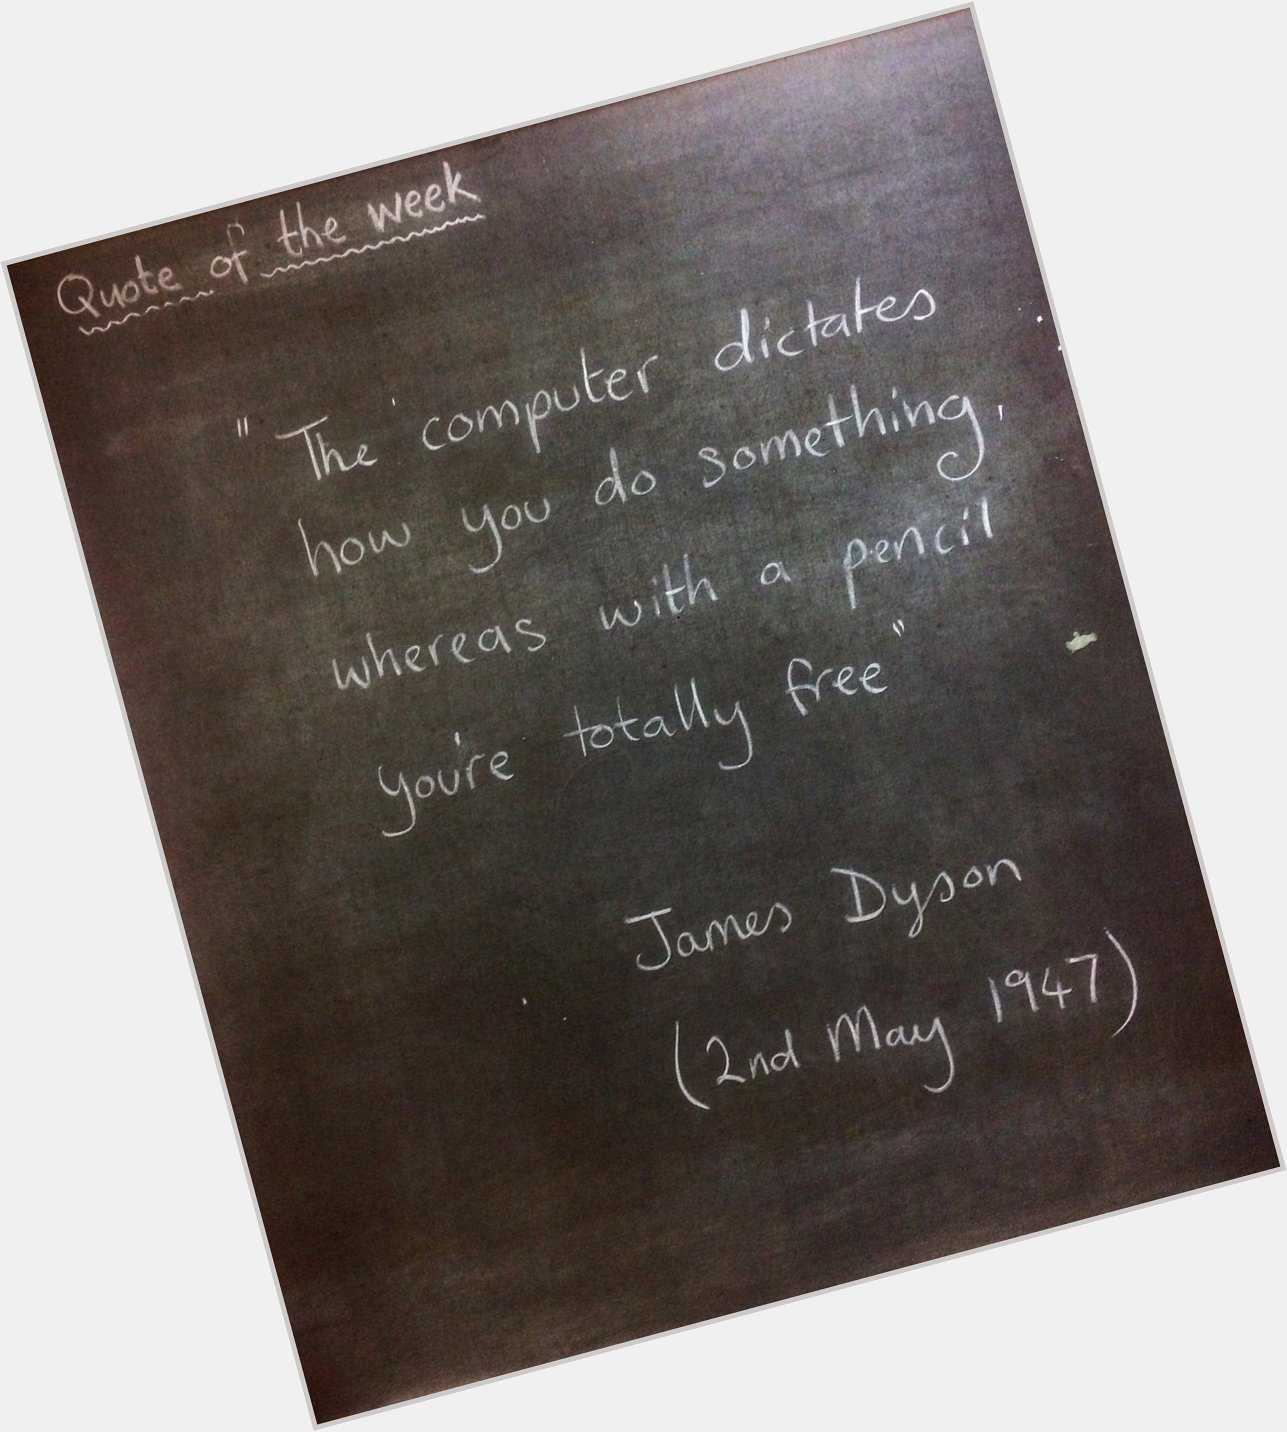   Happy Birthday James Dyson   